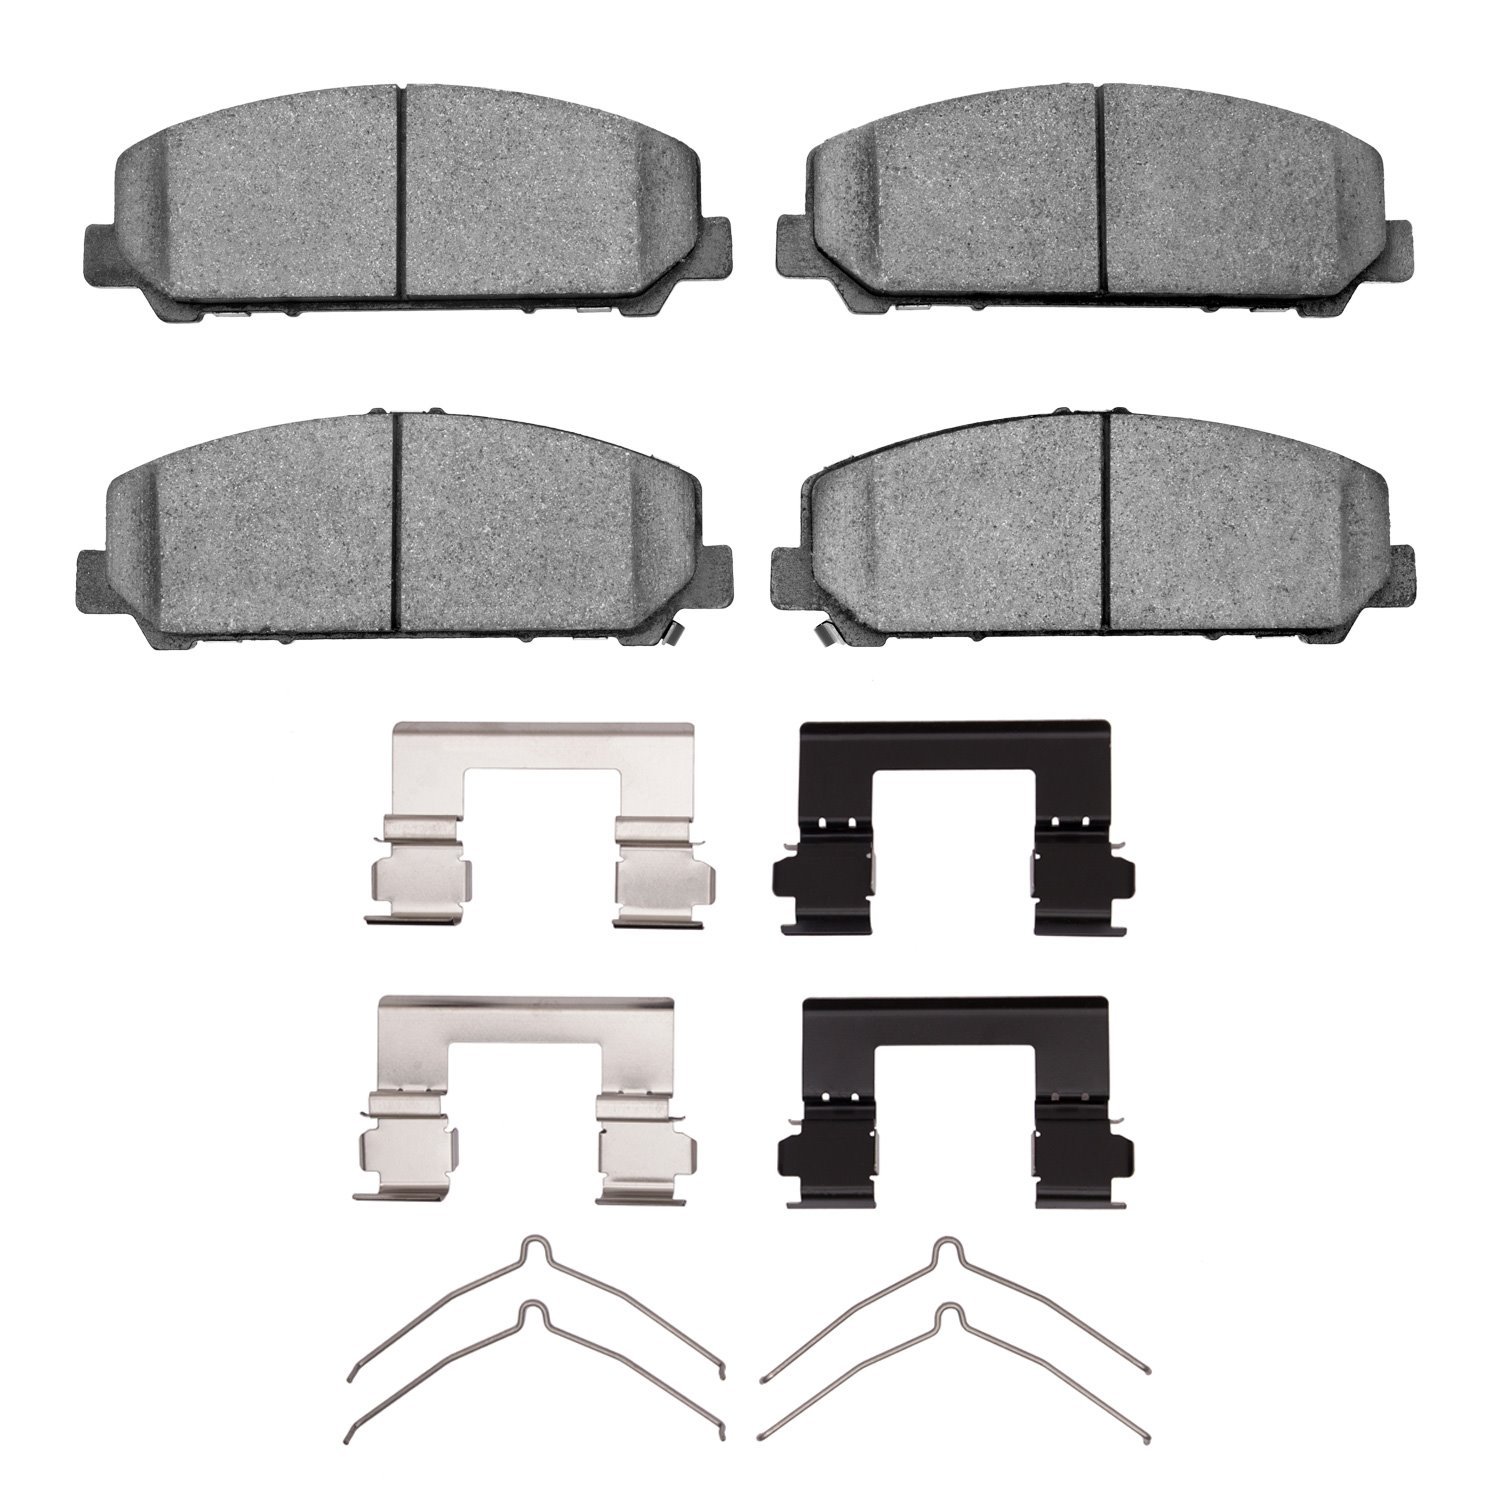 1551-1509-01 5000 Advanced Ceramic Brake Pads & Hardware Kit, Fits Select Infiniti/Nissan, Position: Front